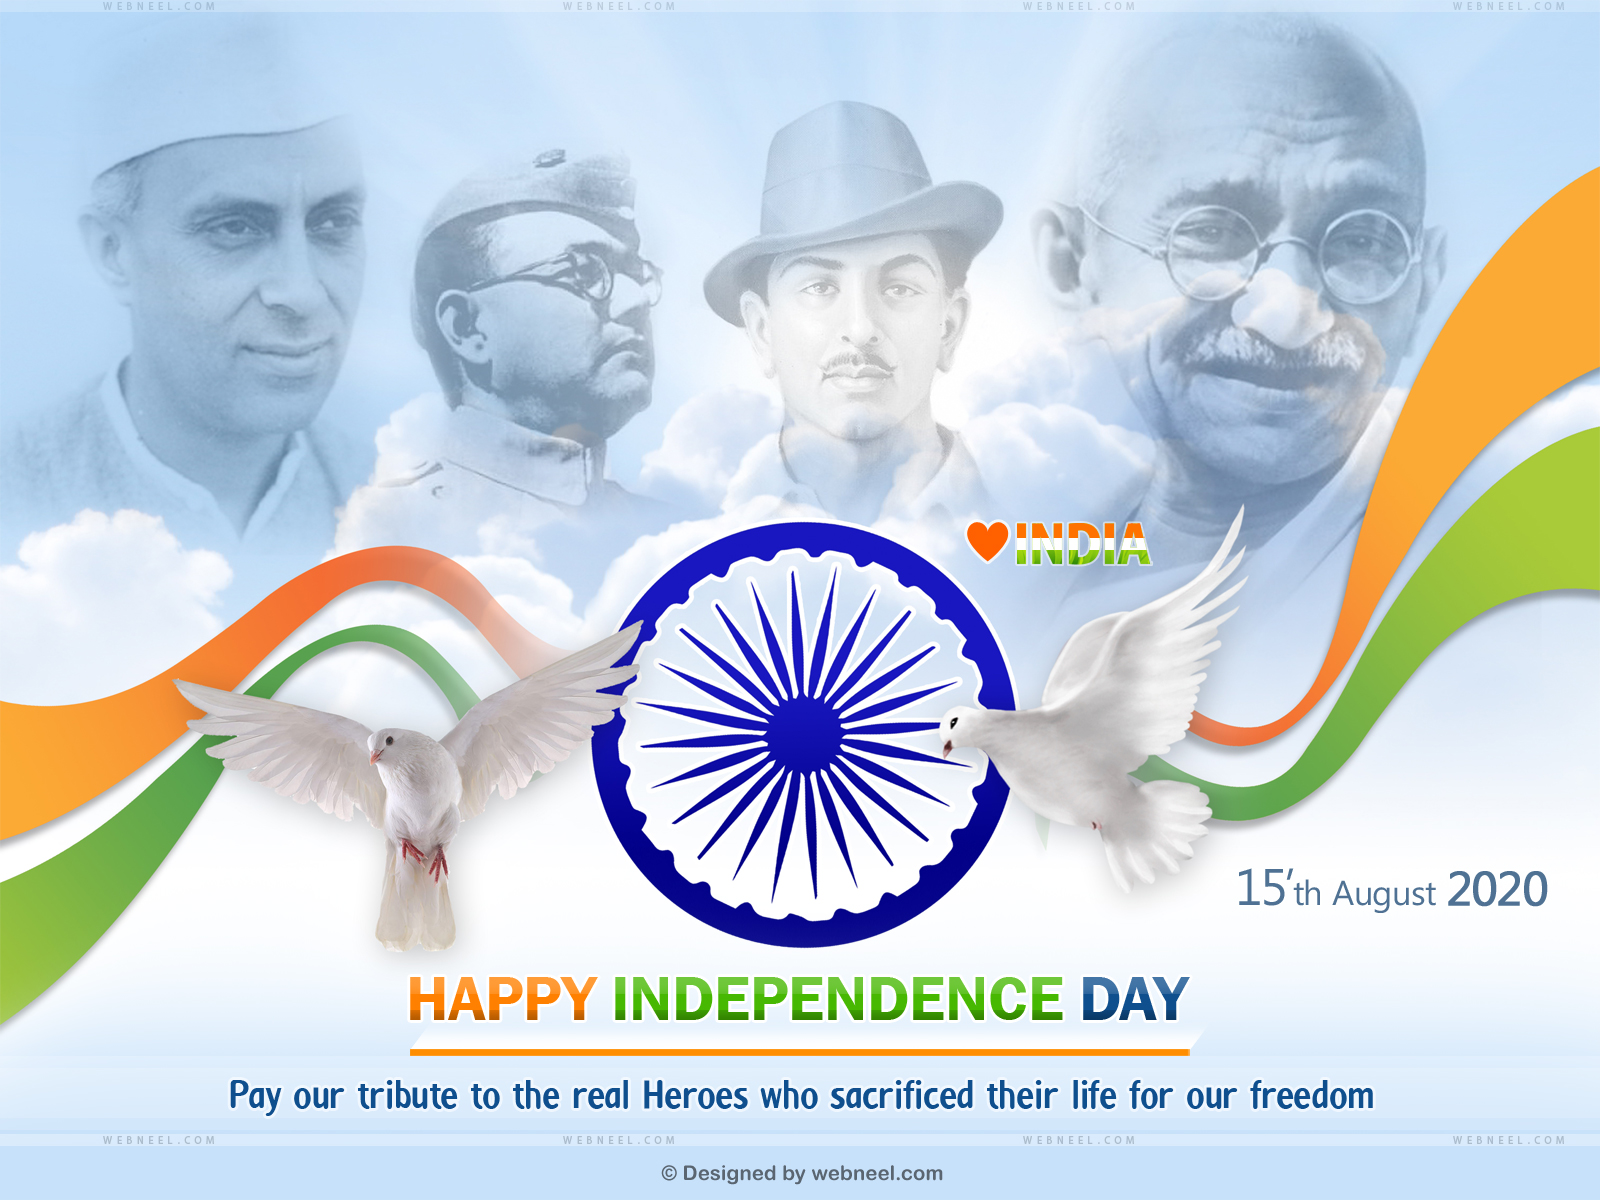 Independence Day Wallpaper Poster Images Photo Greeting Cards Download | Independence  Day Wallpaper : स्वतंत्रता दिवस के टॉप 10 वॉलपेपर से सजाएं अपना WhatsApp |  Hari Bhoomi